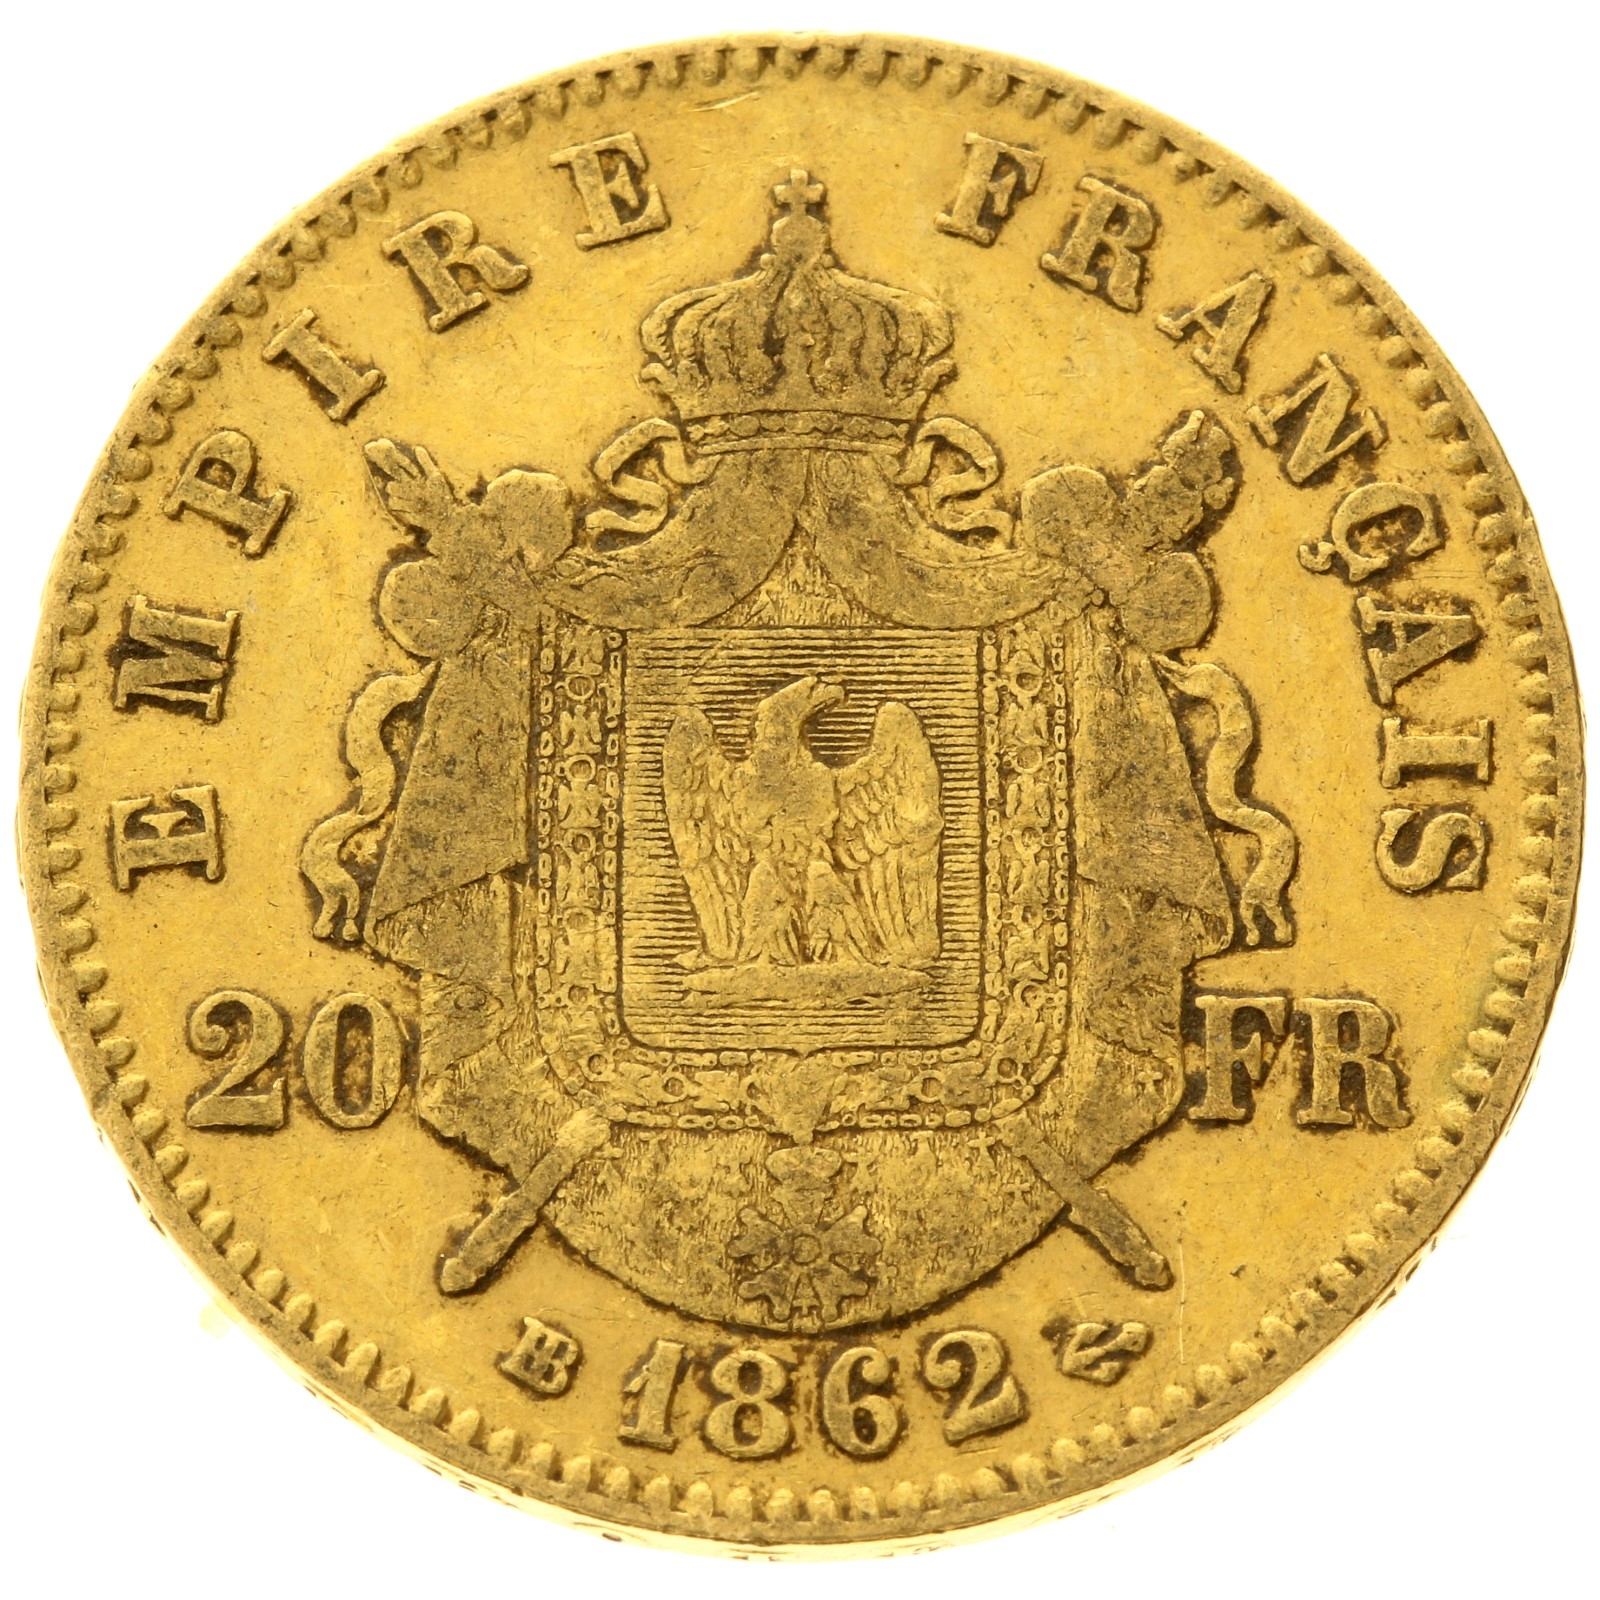 France - 20 francs - 1862 - BB - Napoleon III